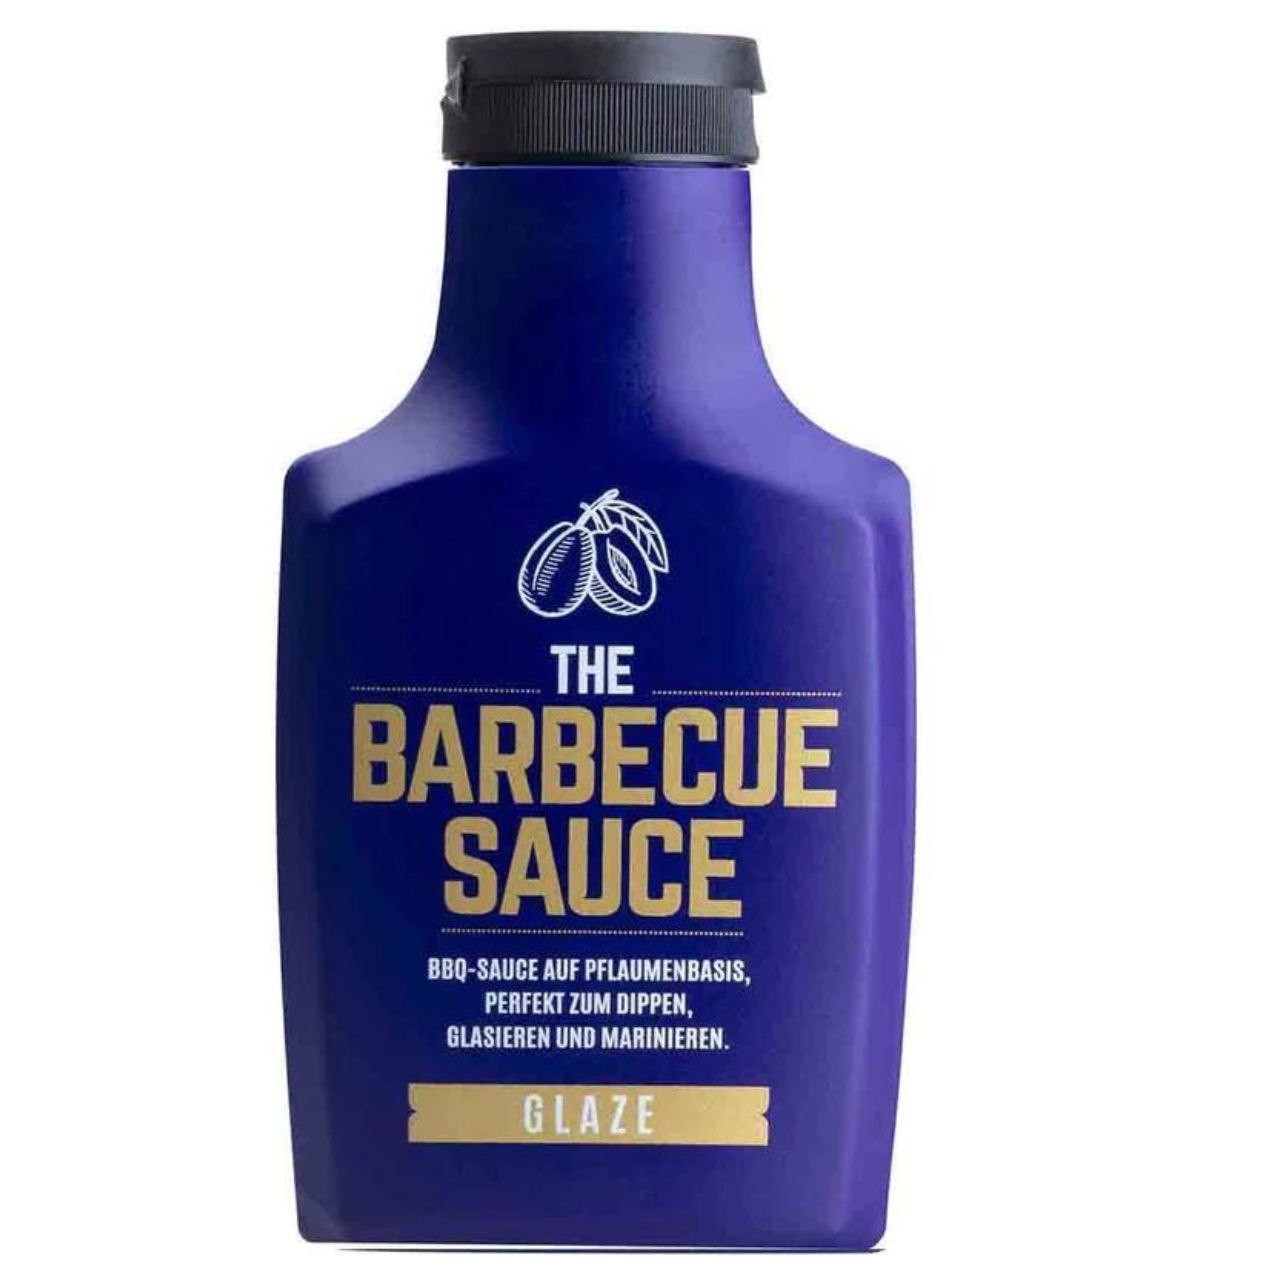 The Barbecue Sauce - Glaze - BBQ Sauce auf Pflaumenbasis